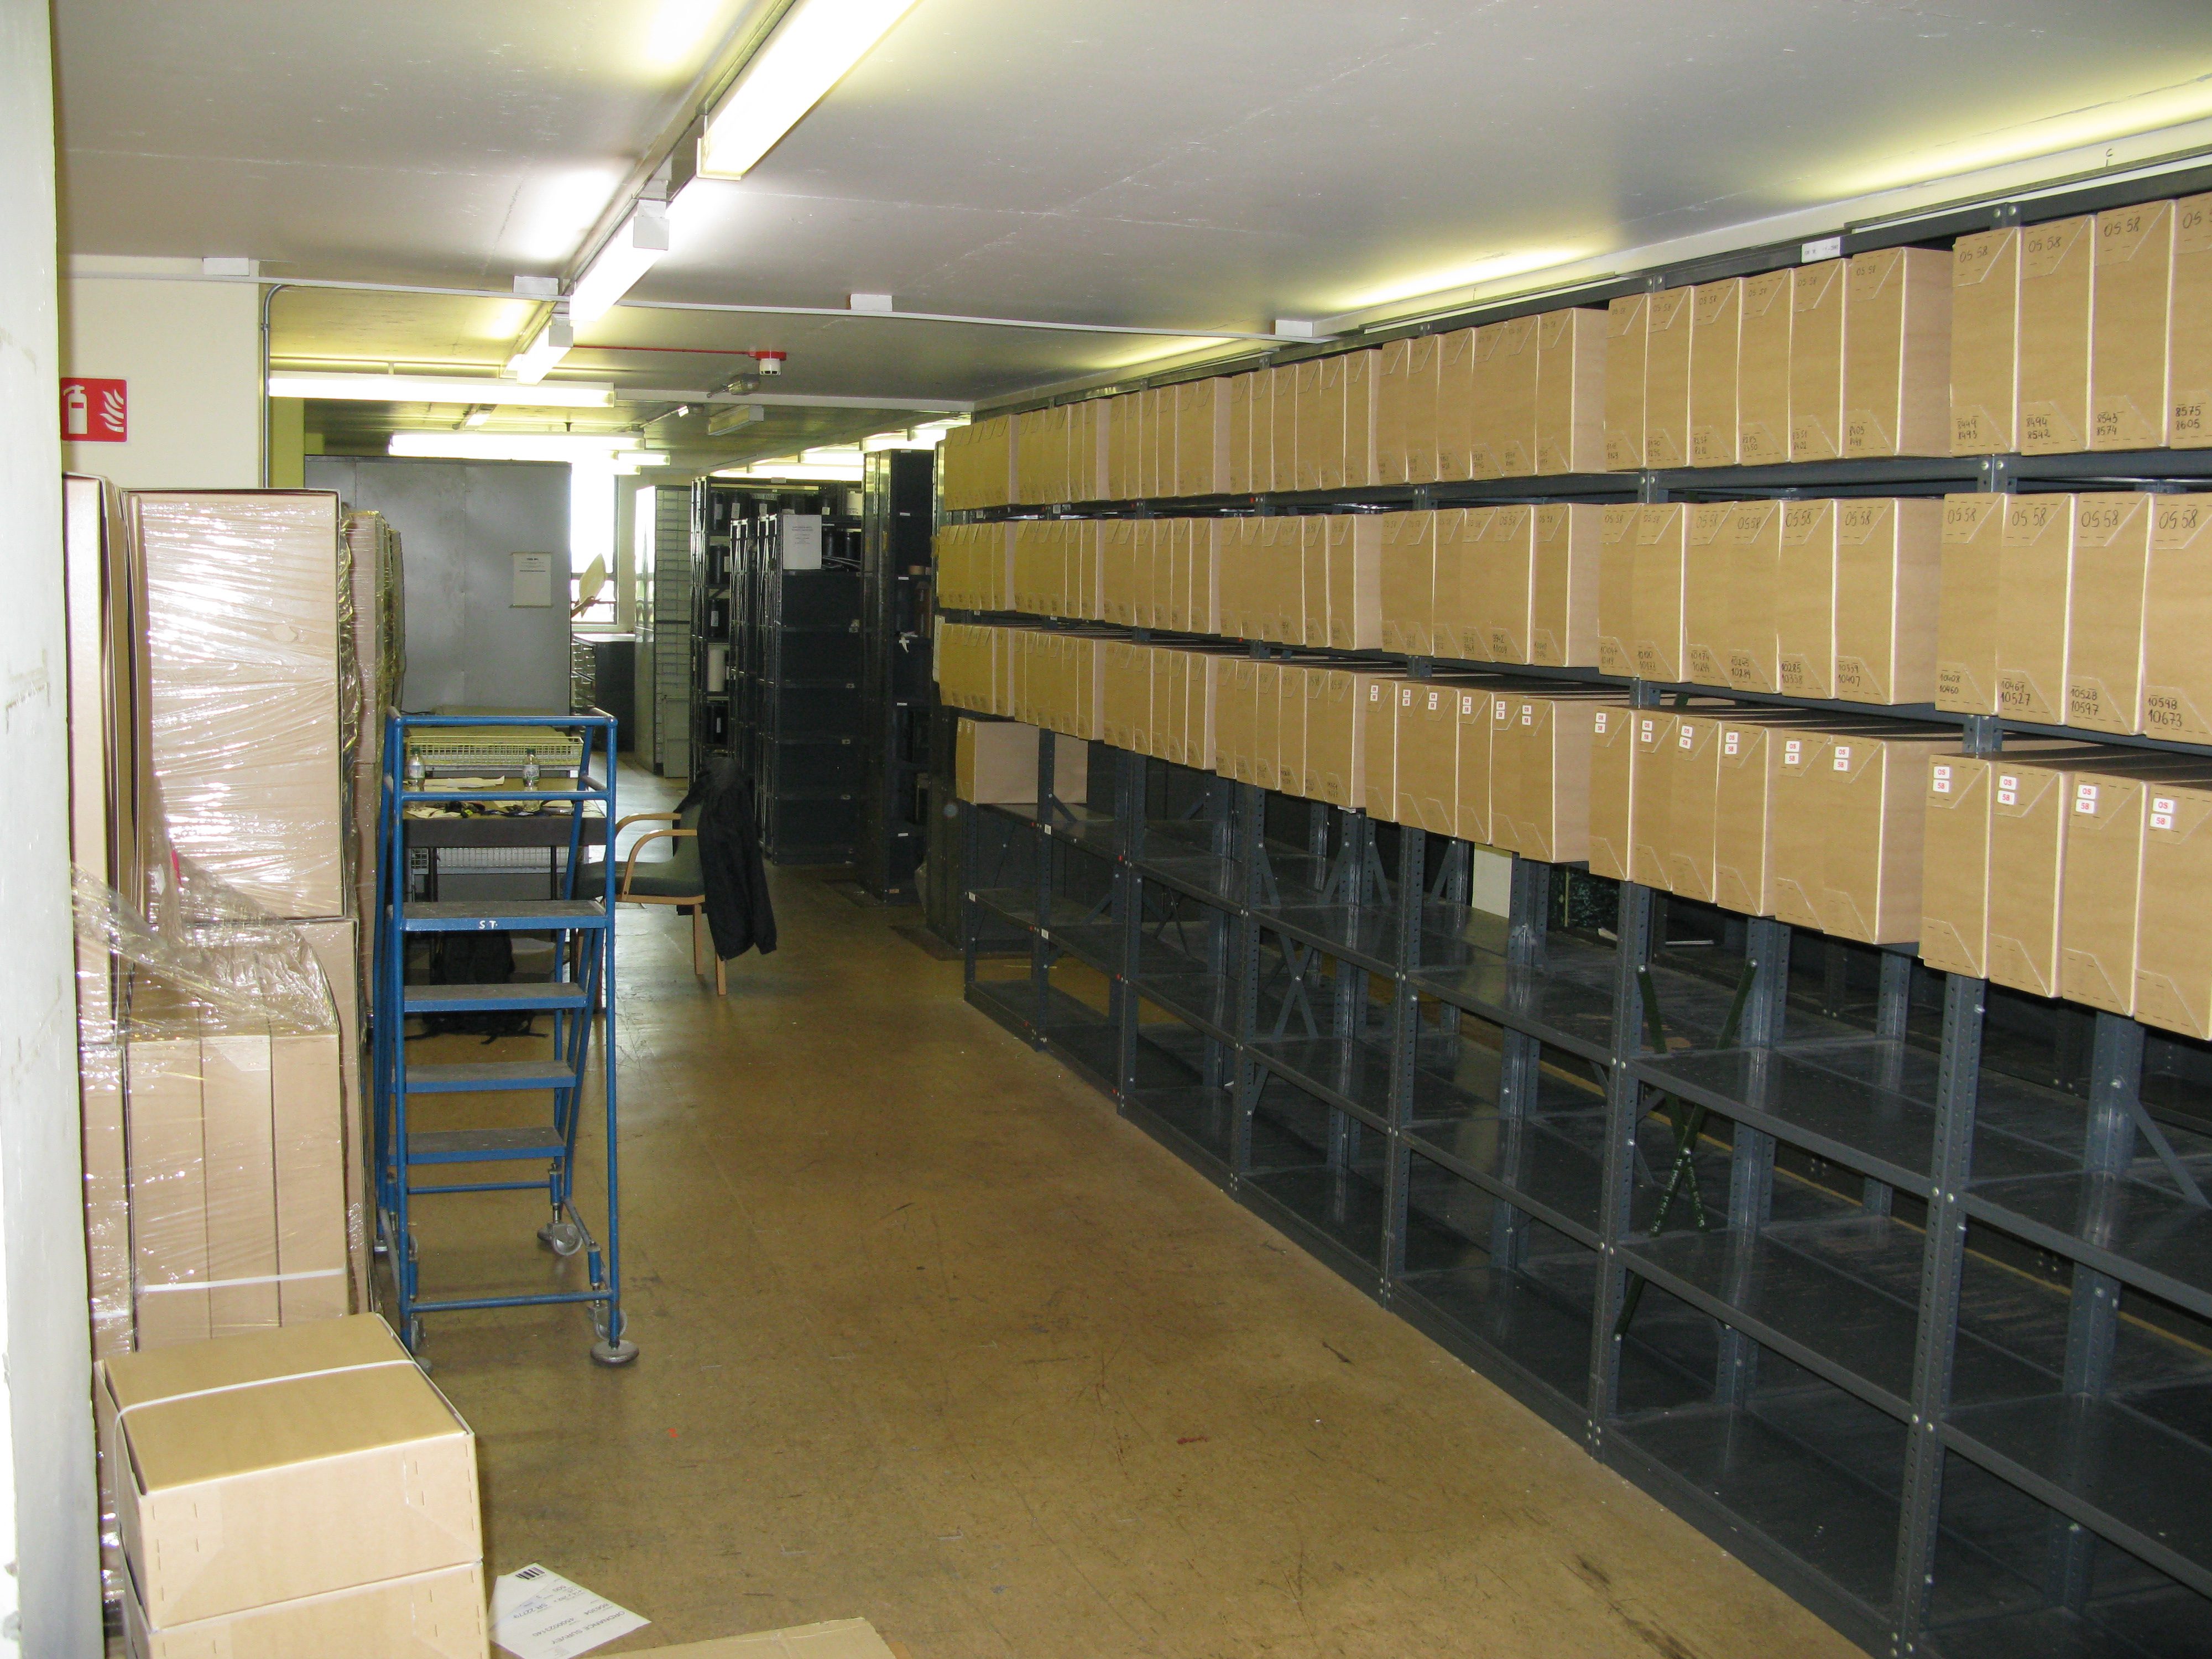 W301 - metal shelving holding cardboard boxes